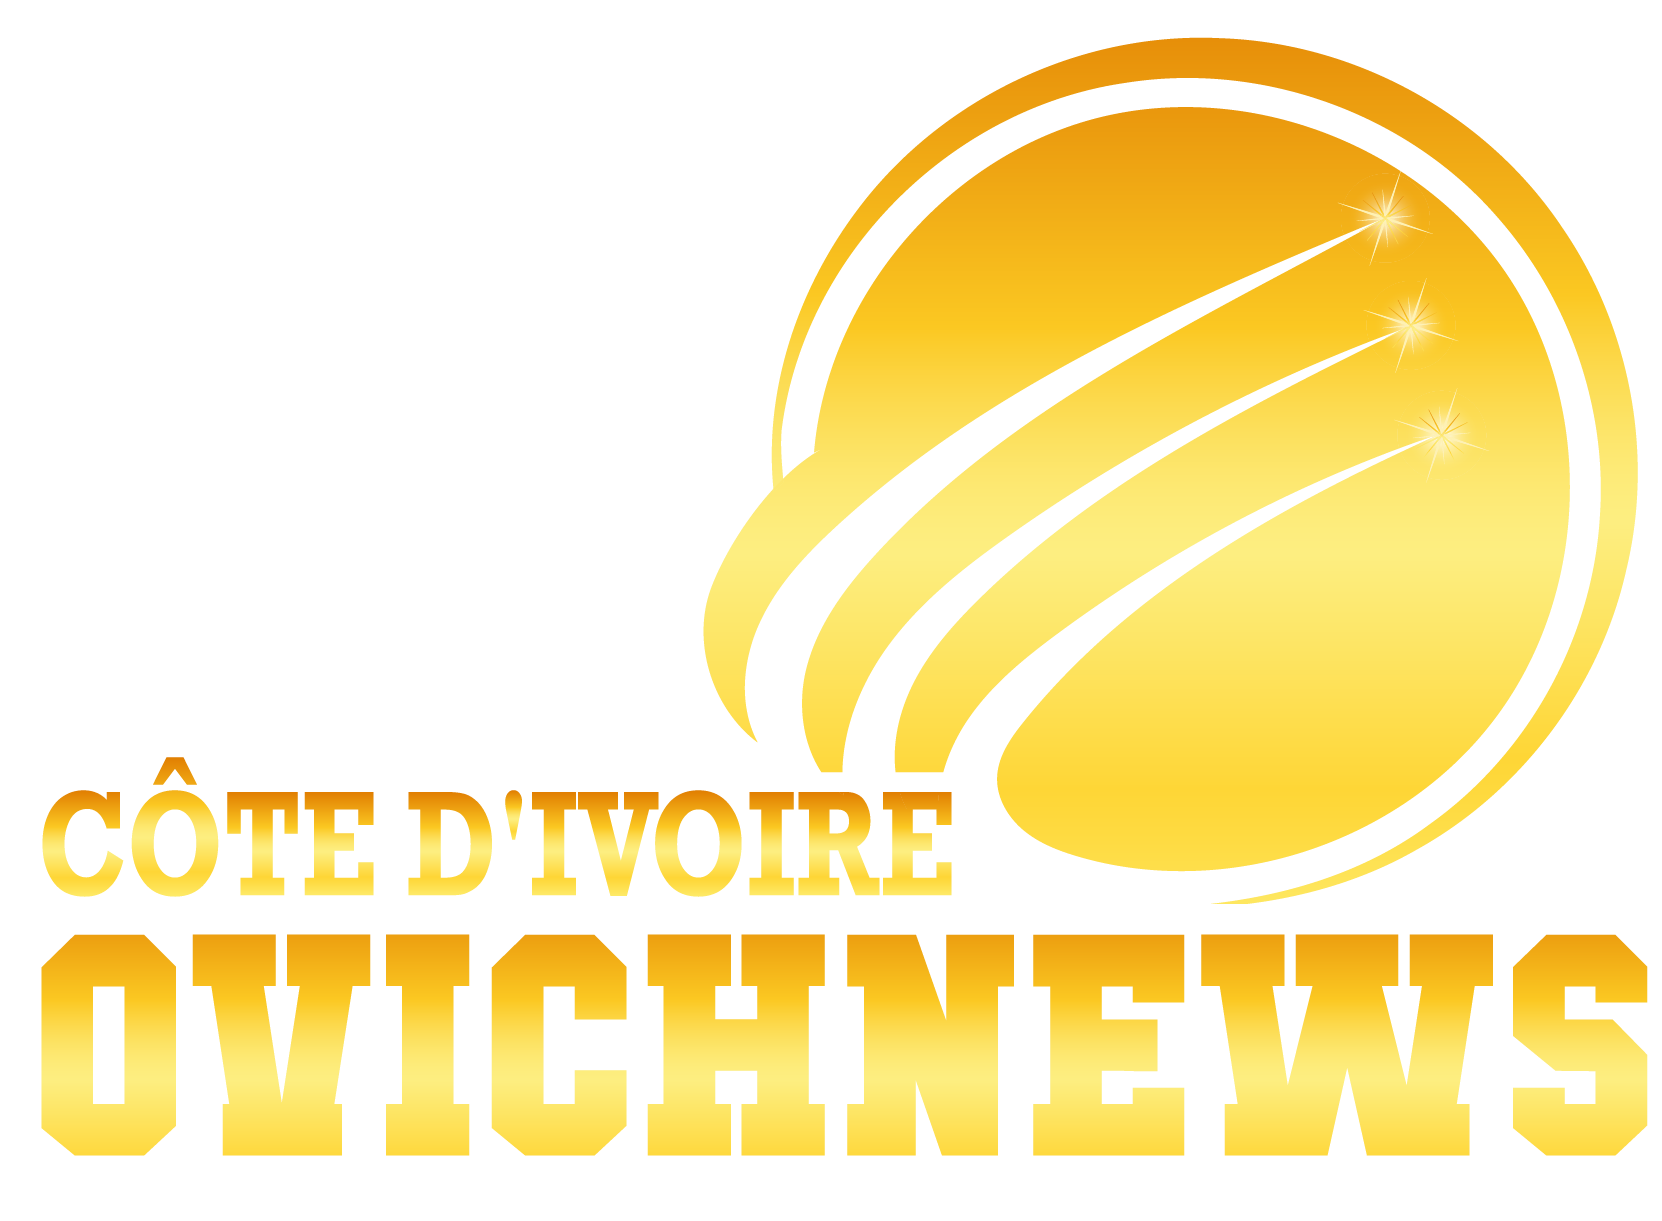 Ovichnews Cote d'ivoire